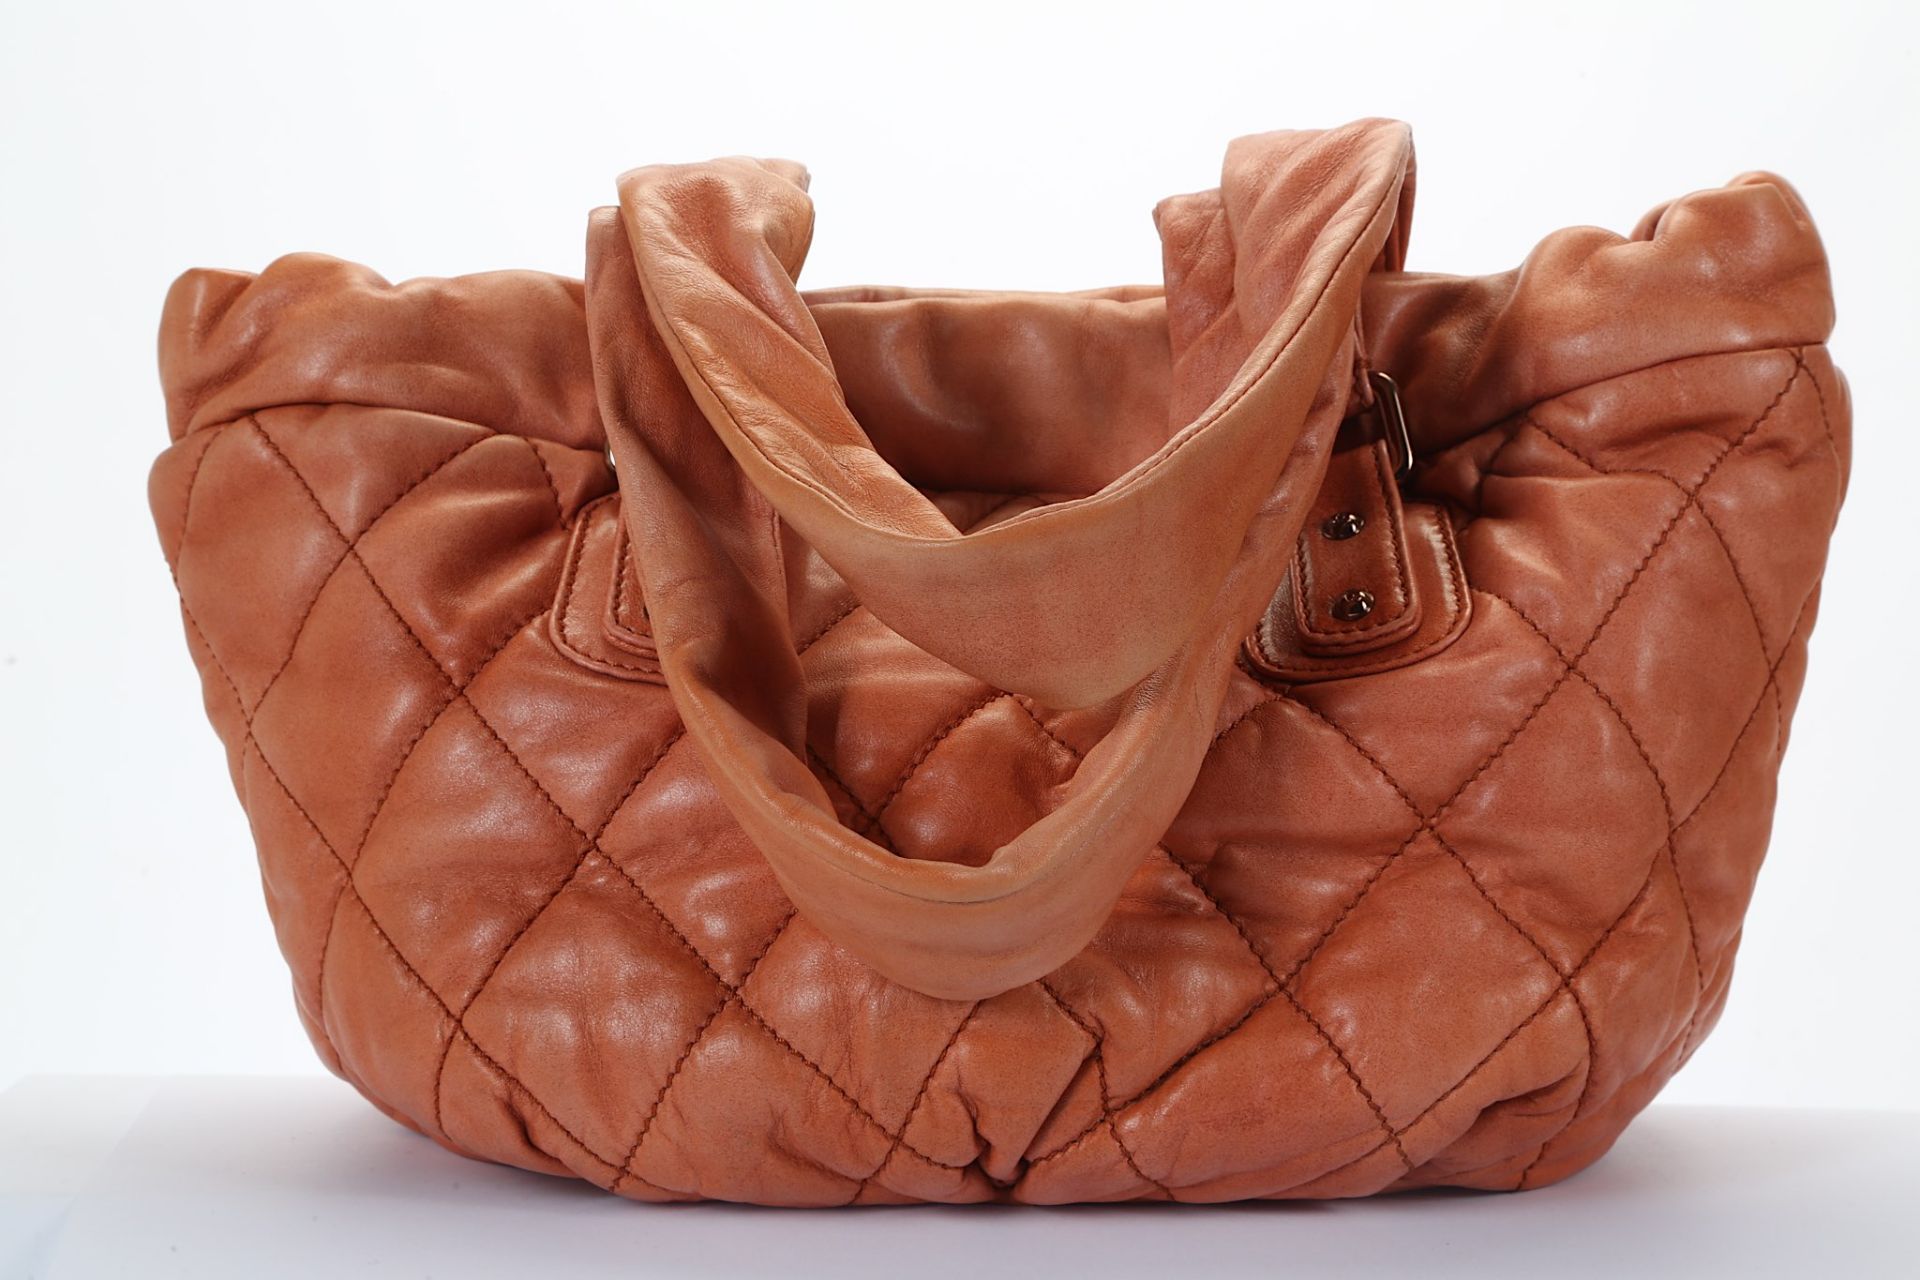 Chanel Coral Leather Shoulder Bag, c. 2005-06, puf - Image 3 of 7